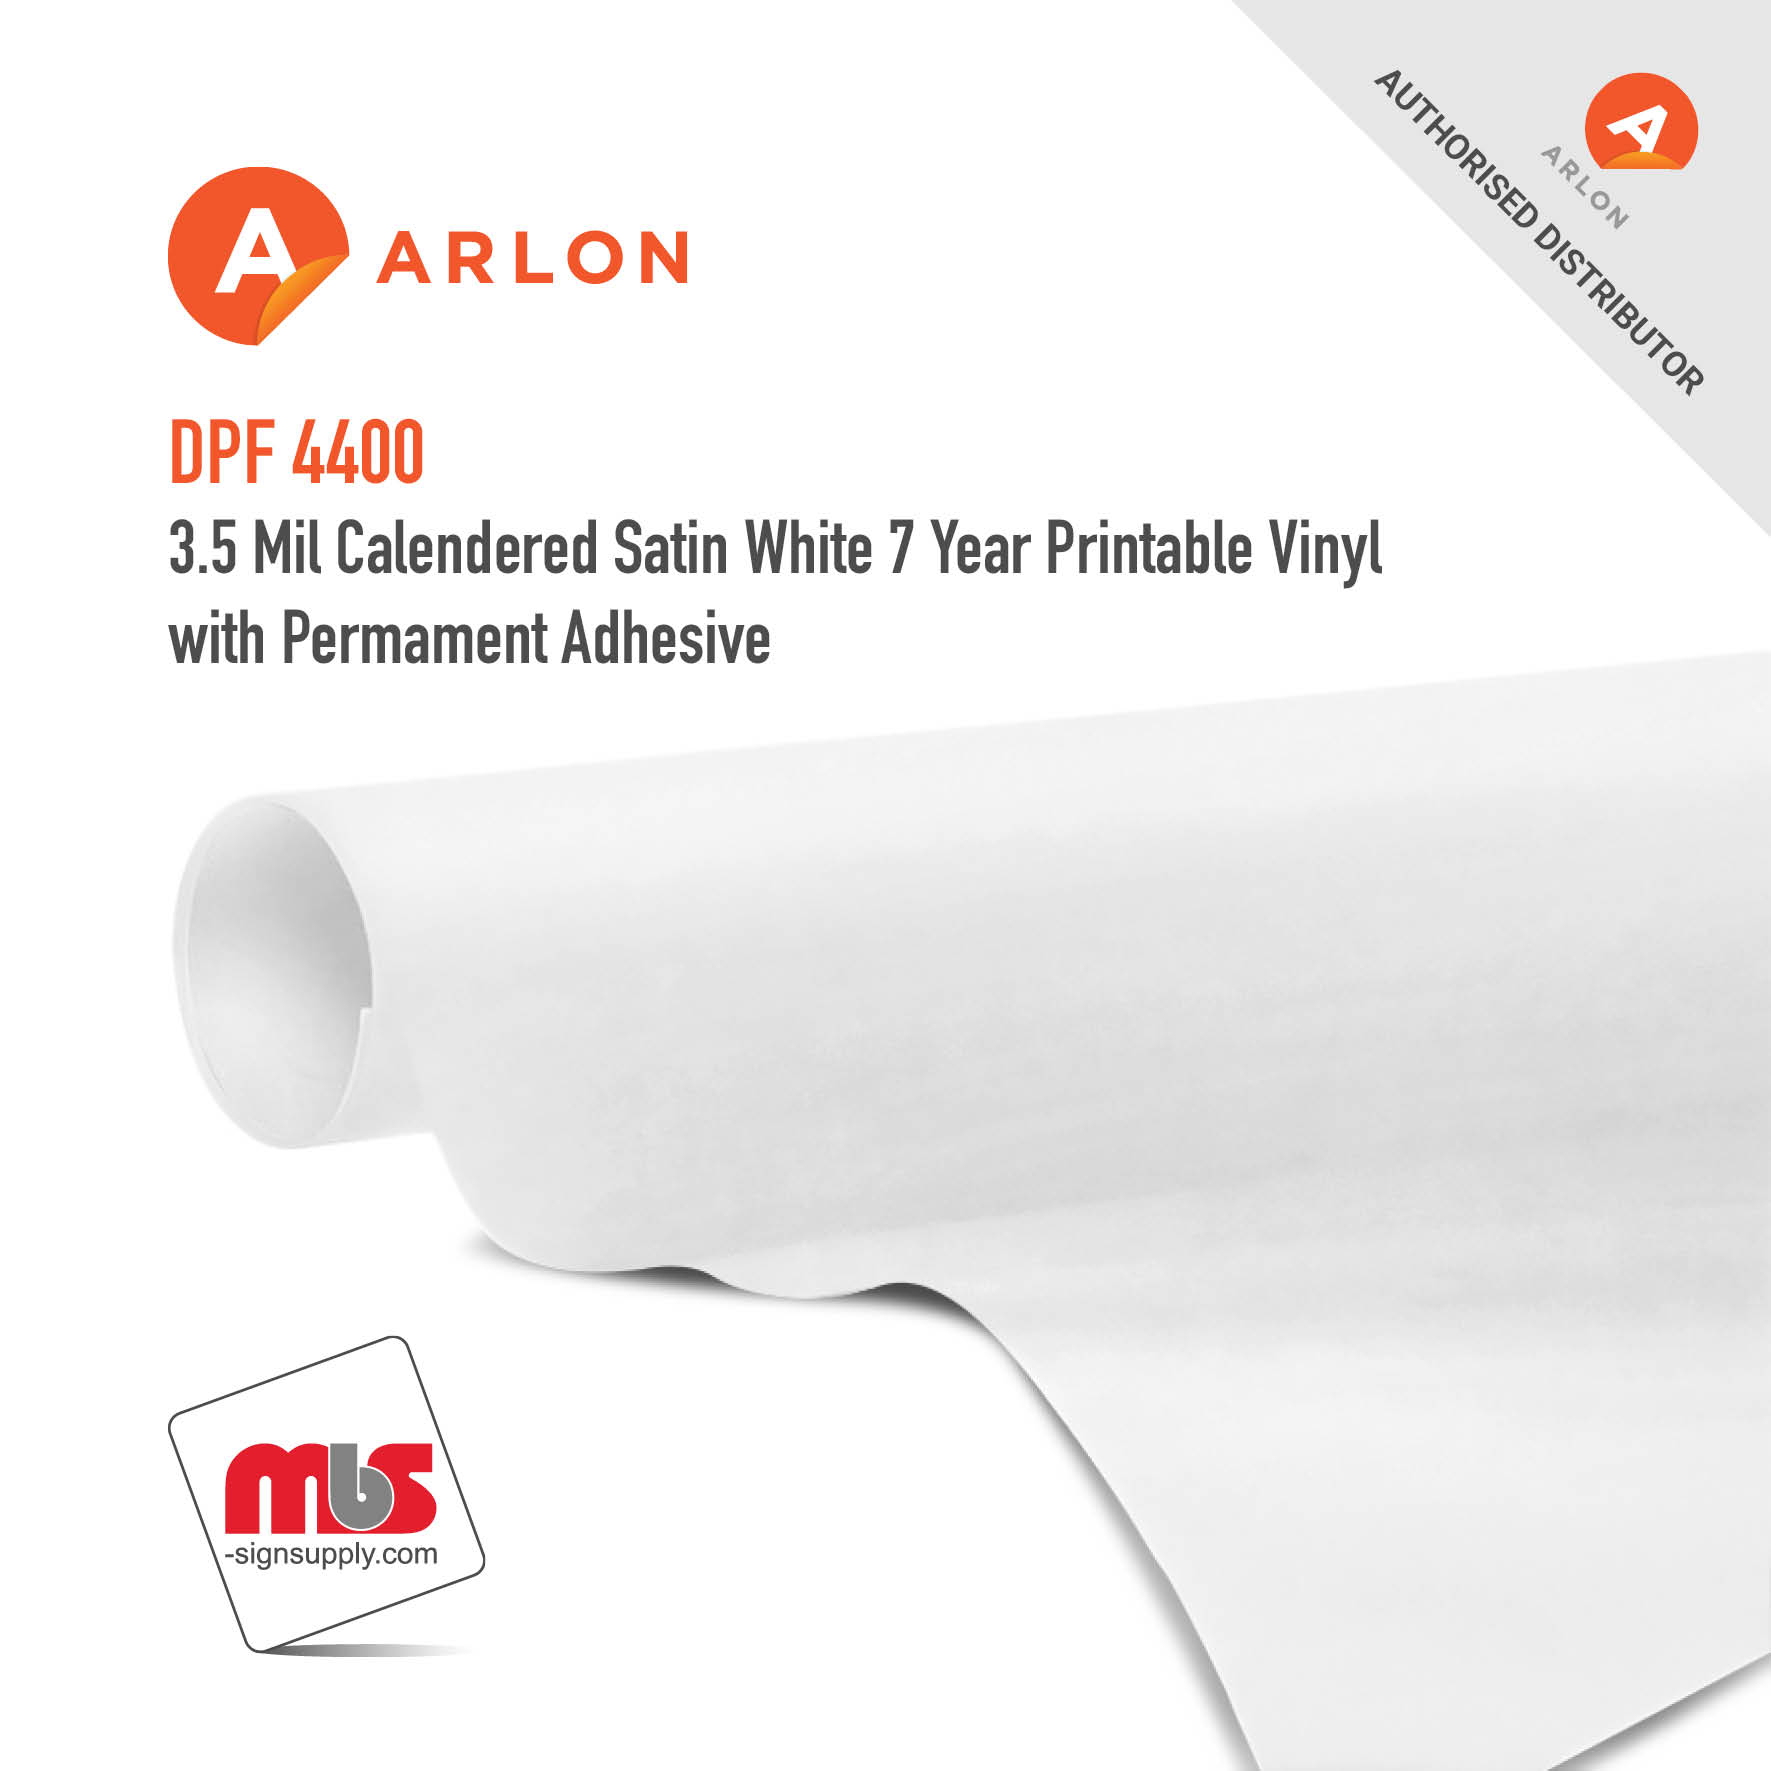 54'' x 50 Yard Roll - Arlon DPF 4400 3.5 Mil Calendered Satin White 7 Year Printable Vinyl w/ Permamnent Adhesive